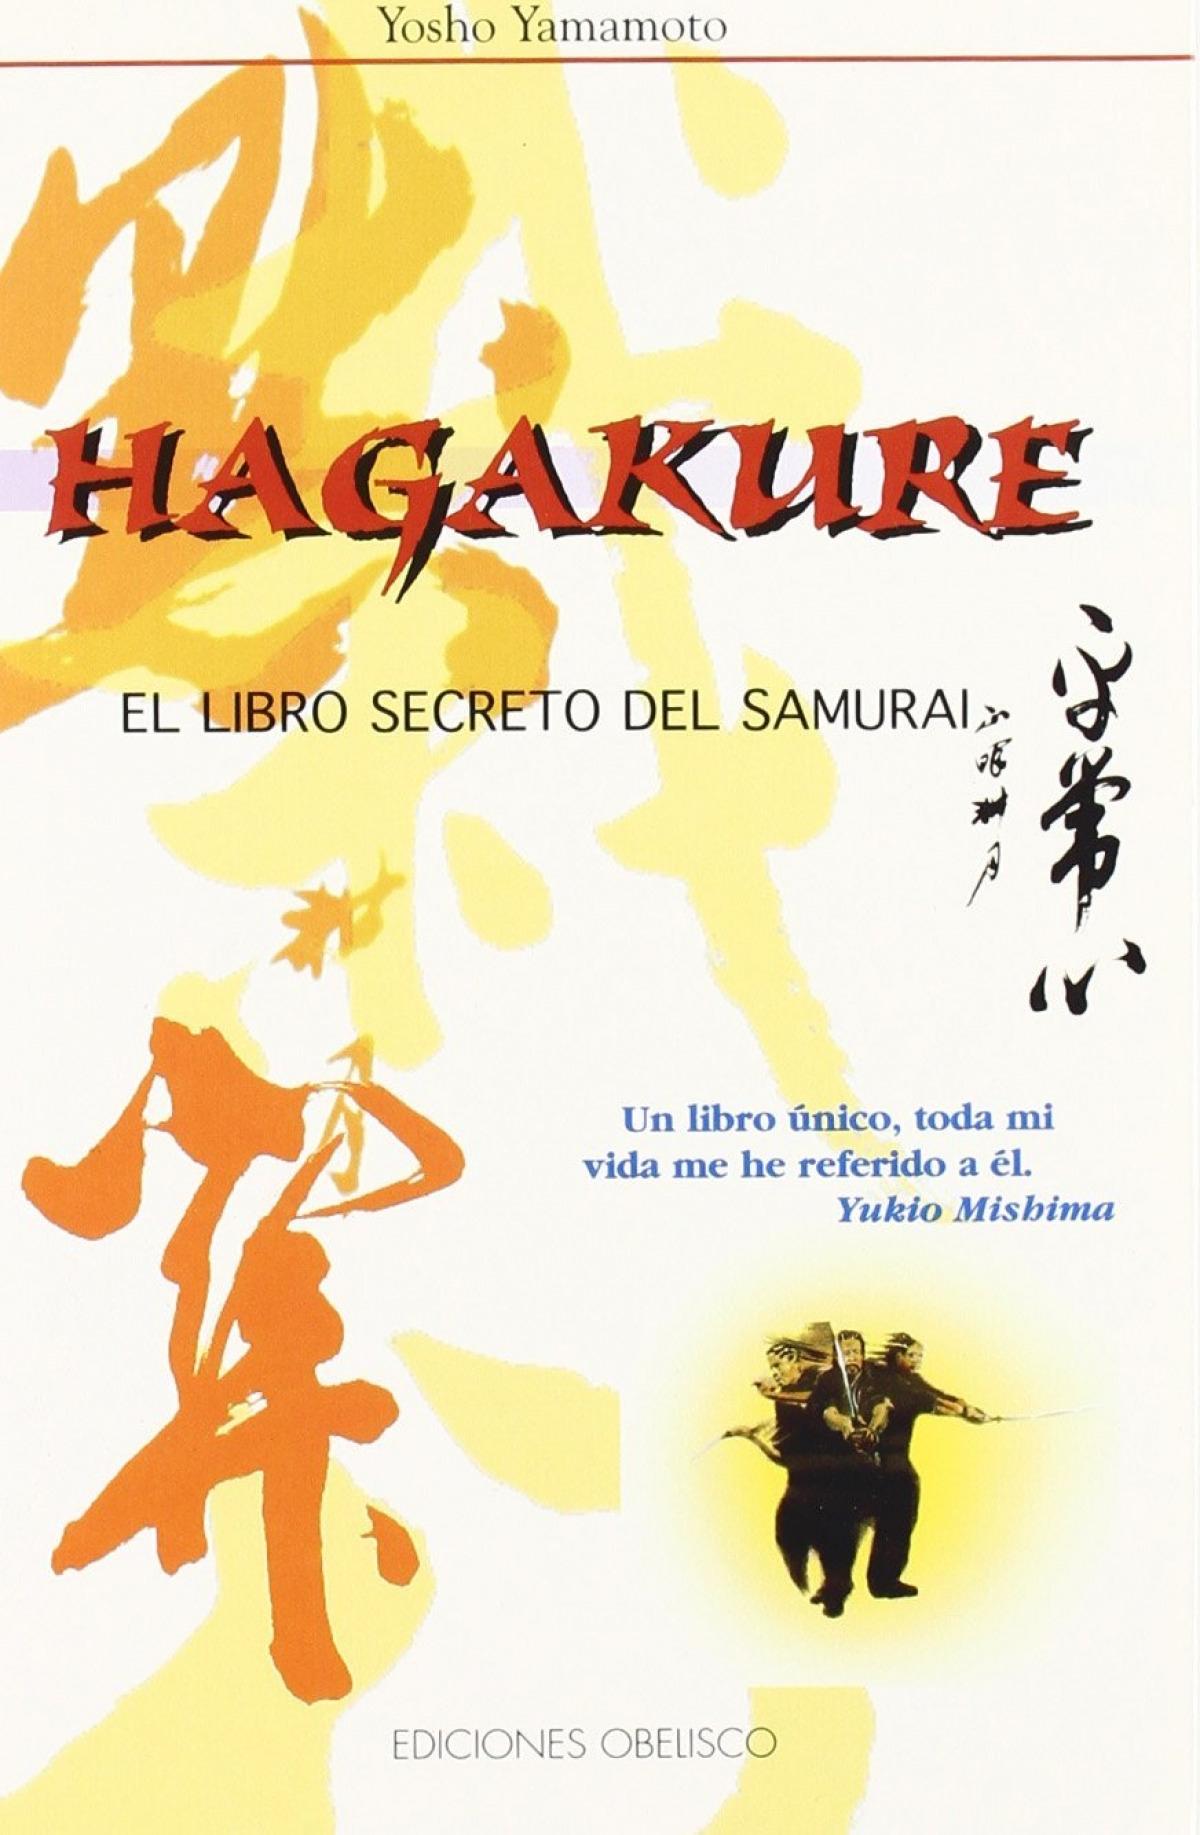 Hagakure "El Libro Secreto del Samurai"